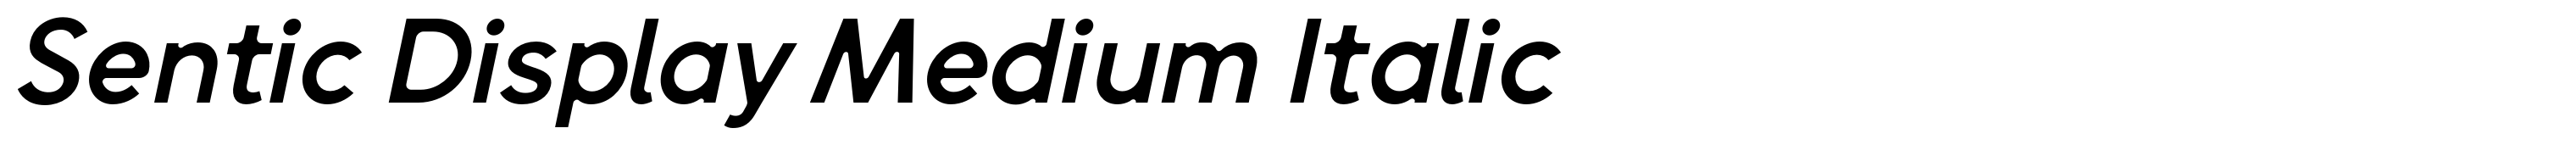 Sentic Display Medium Italic